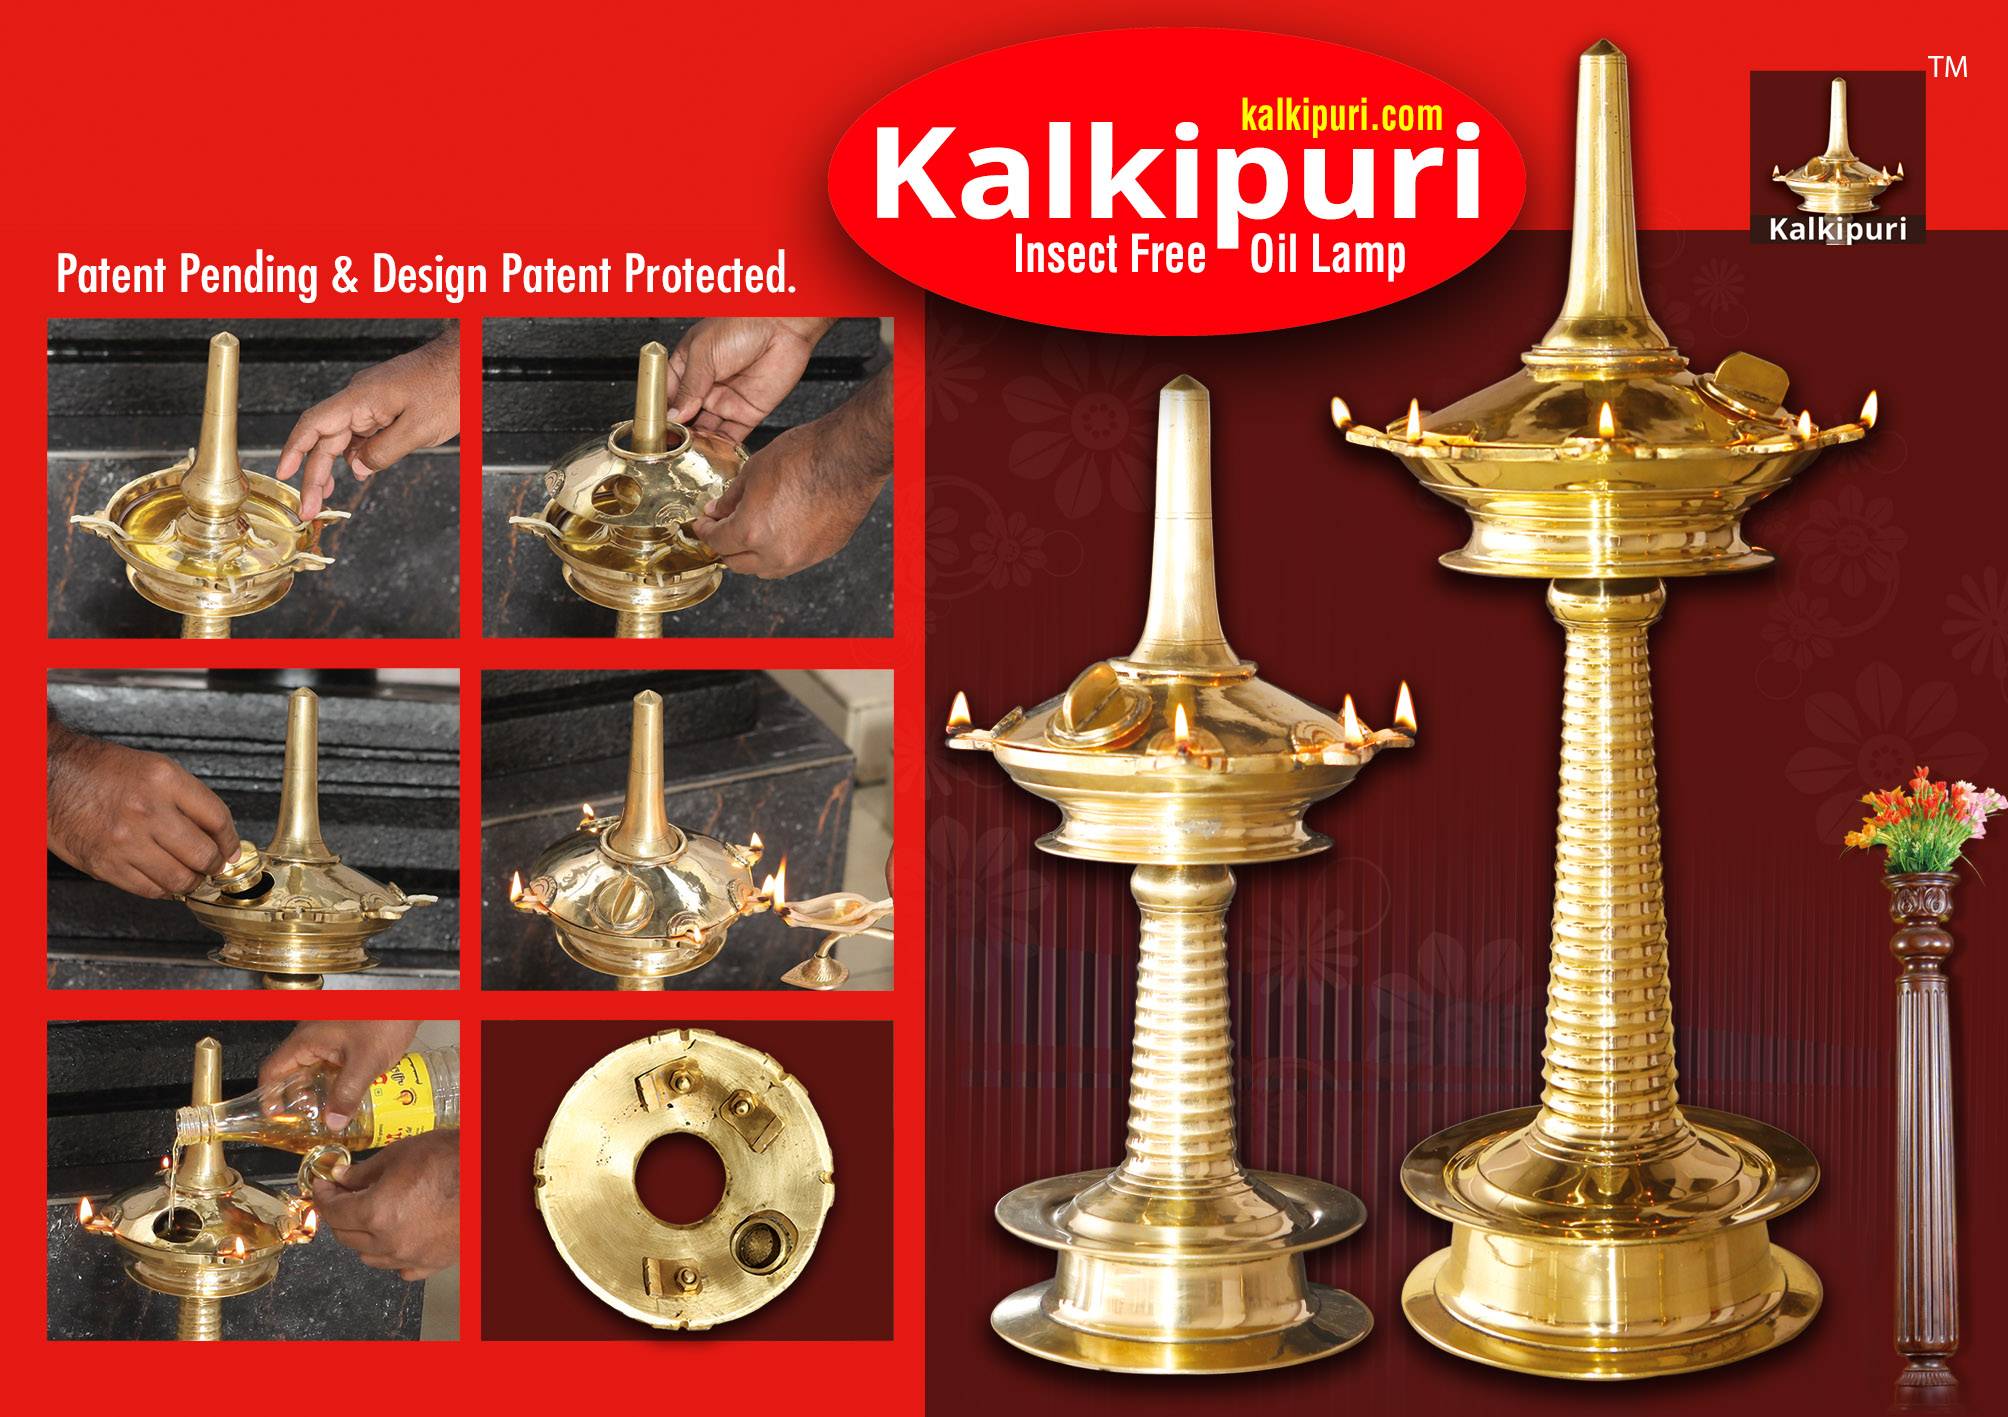 Kalkipuri Insect Free Bronze Oil Lamp. Patent Pending & Design Patent Protected.